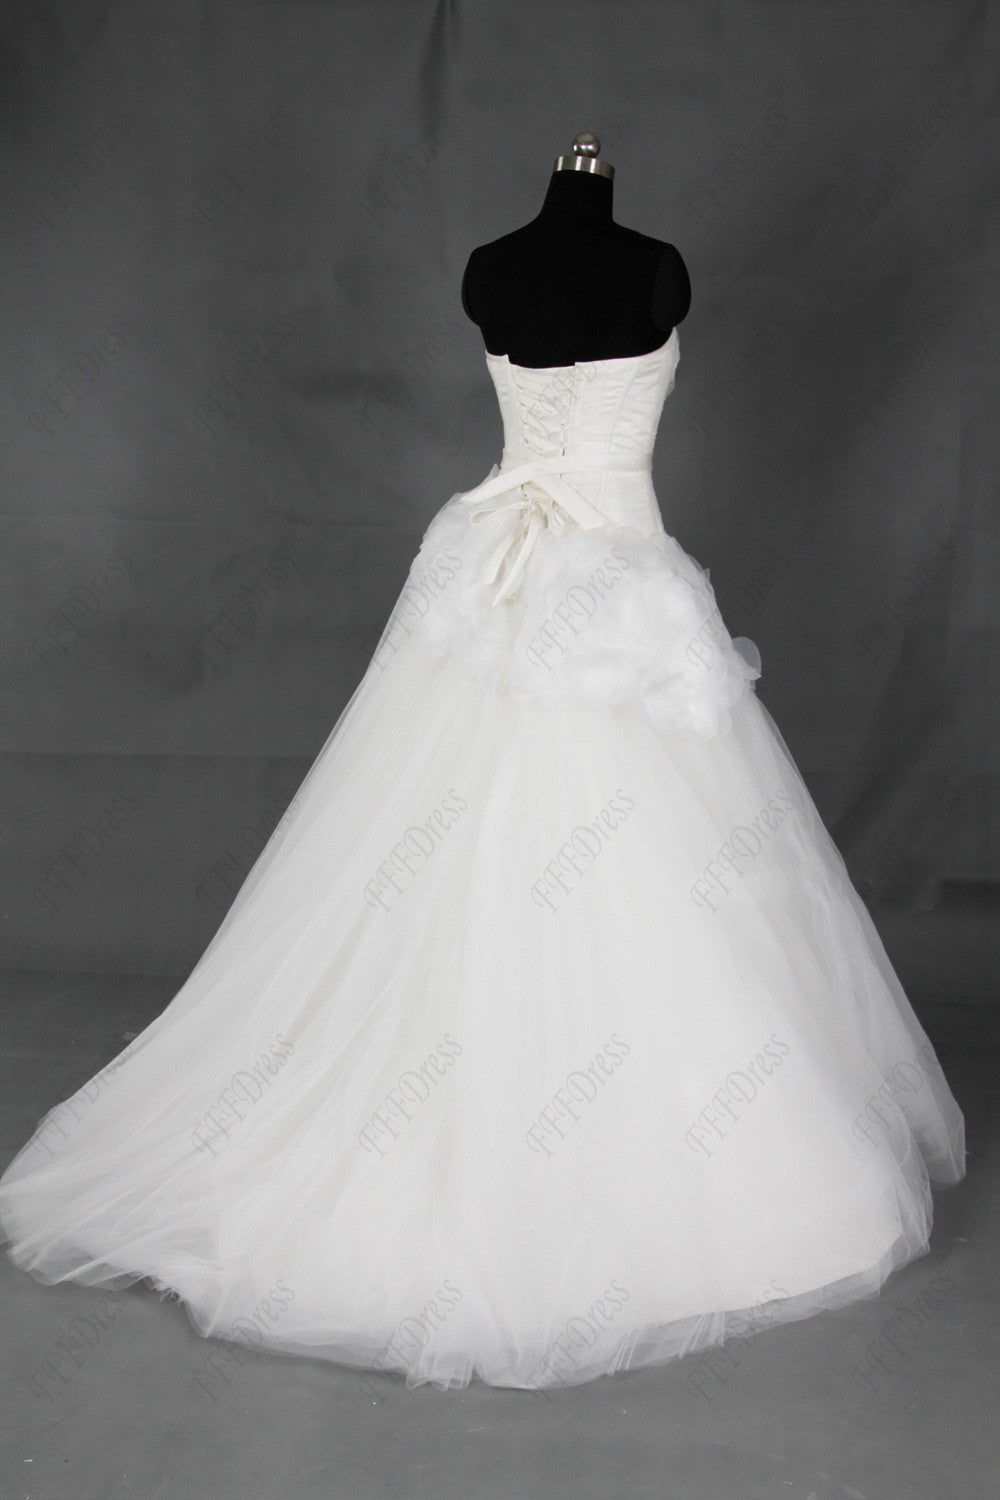 Sweetheart ball gown wedding dresses with sash